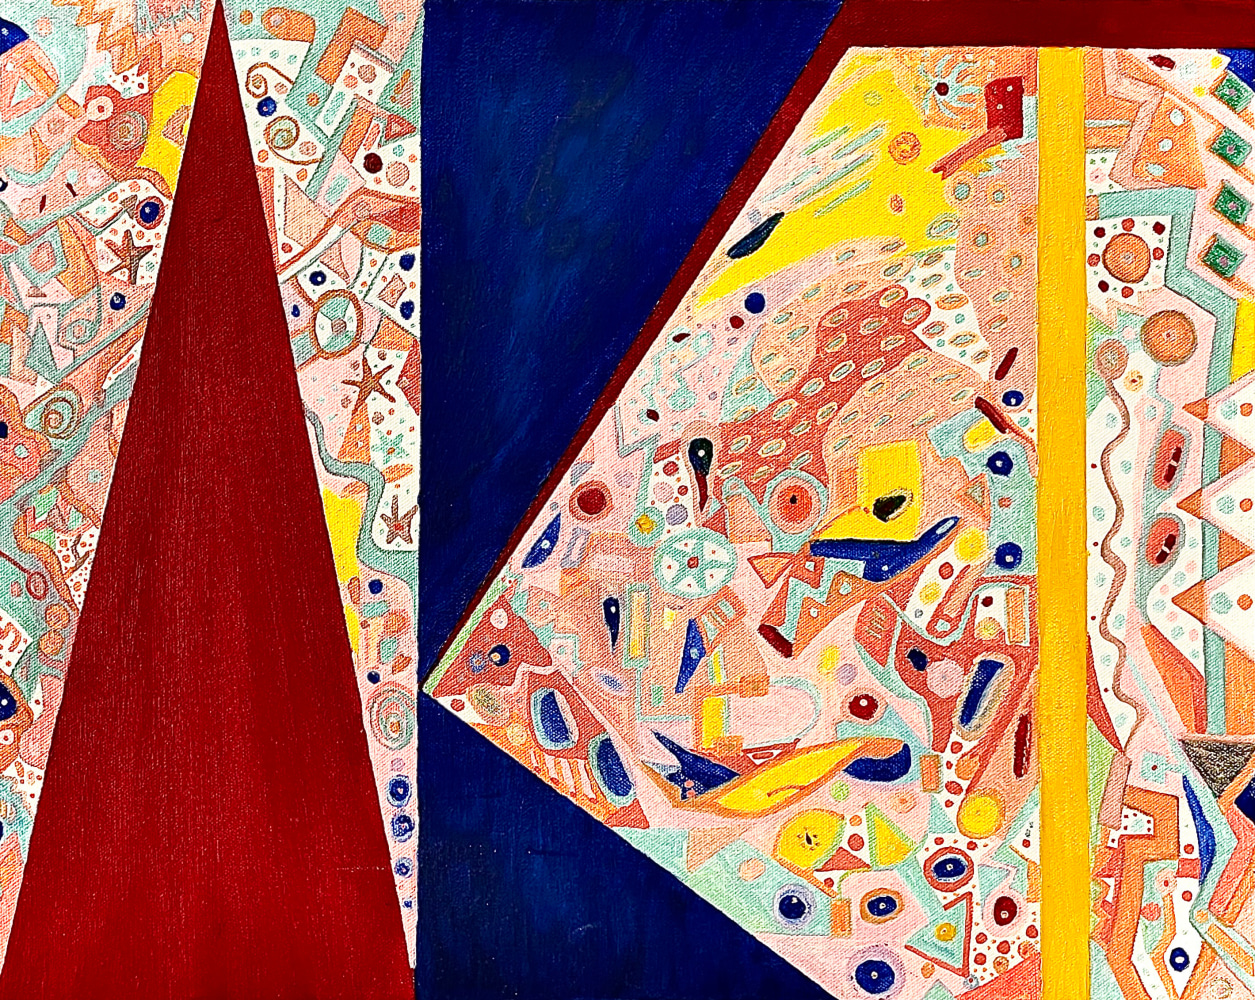 Ron Burkhardt, A-R-T, 2013, Acrylic on Canvas, 16h x 20w